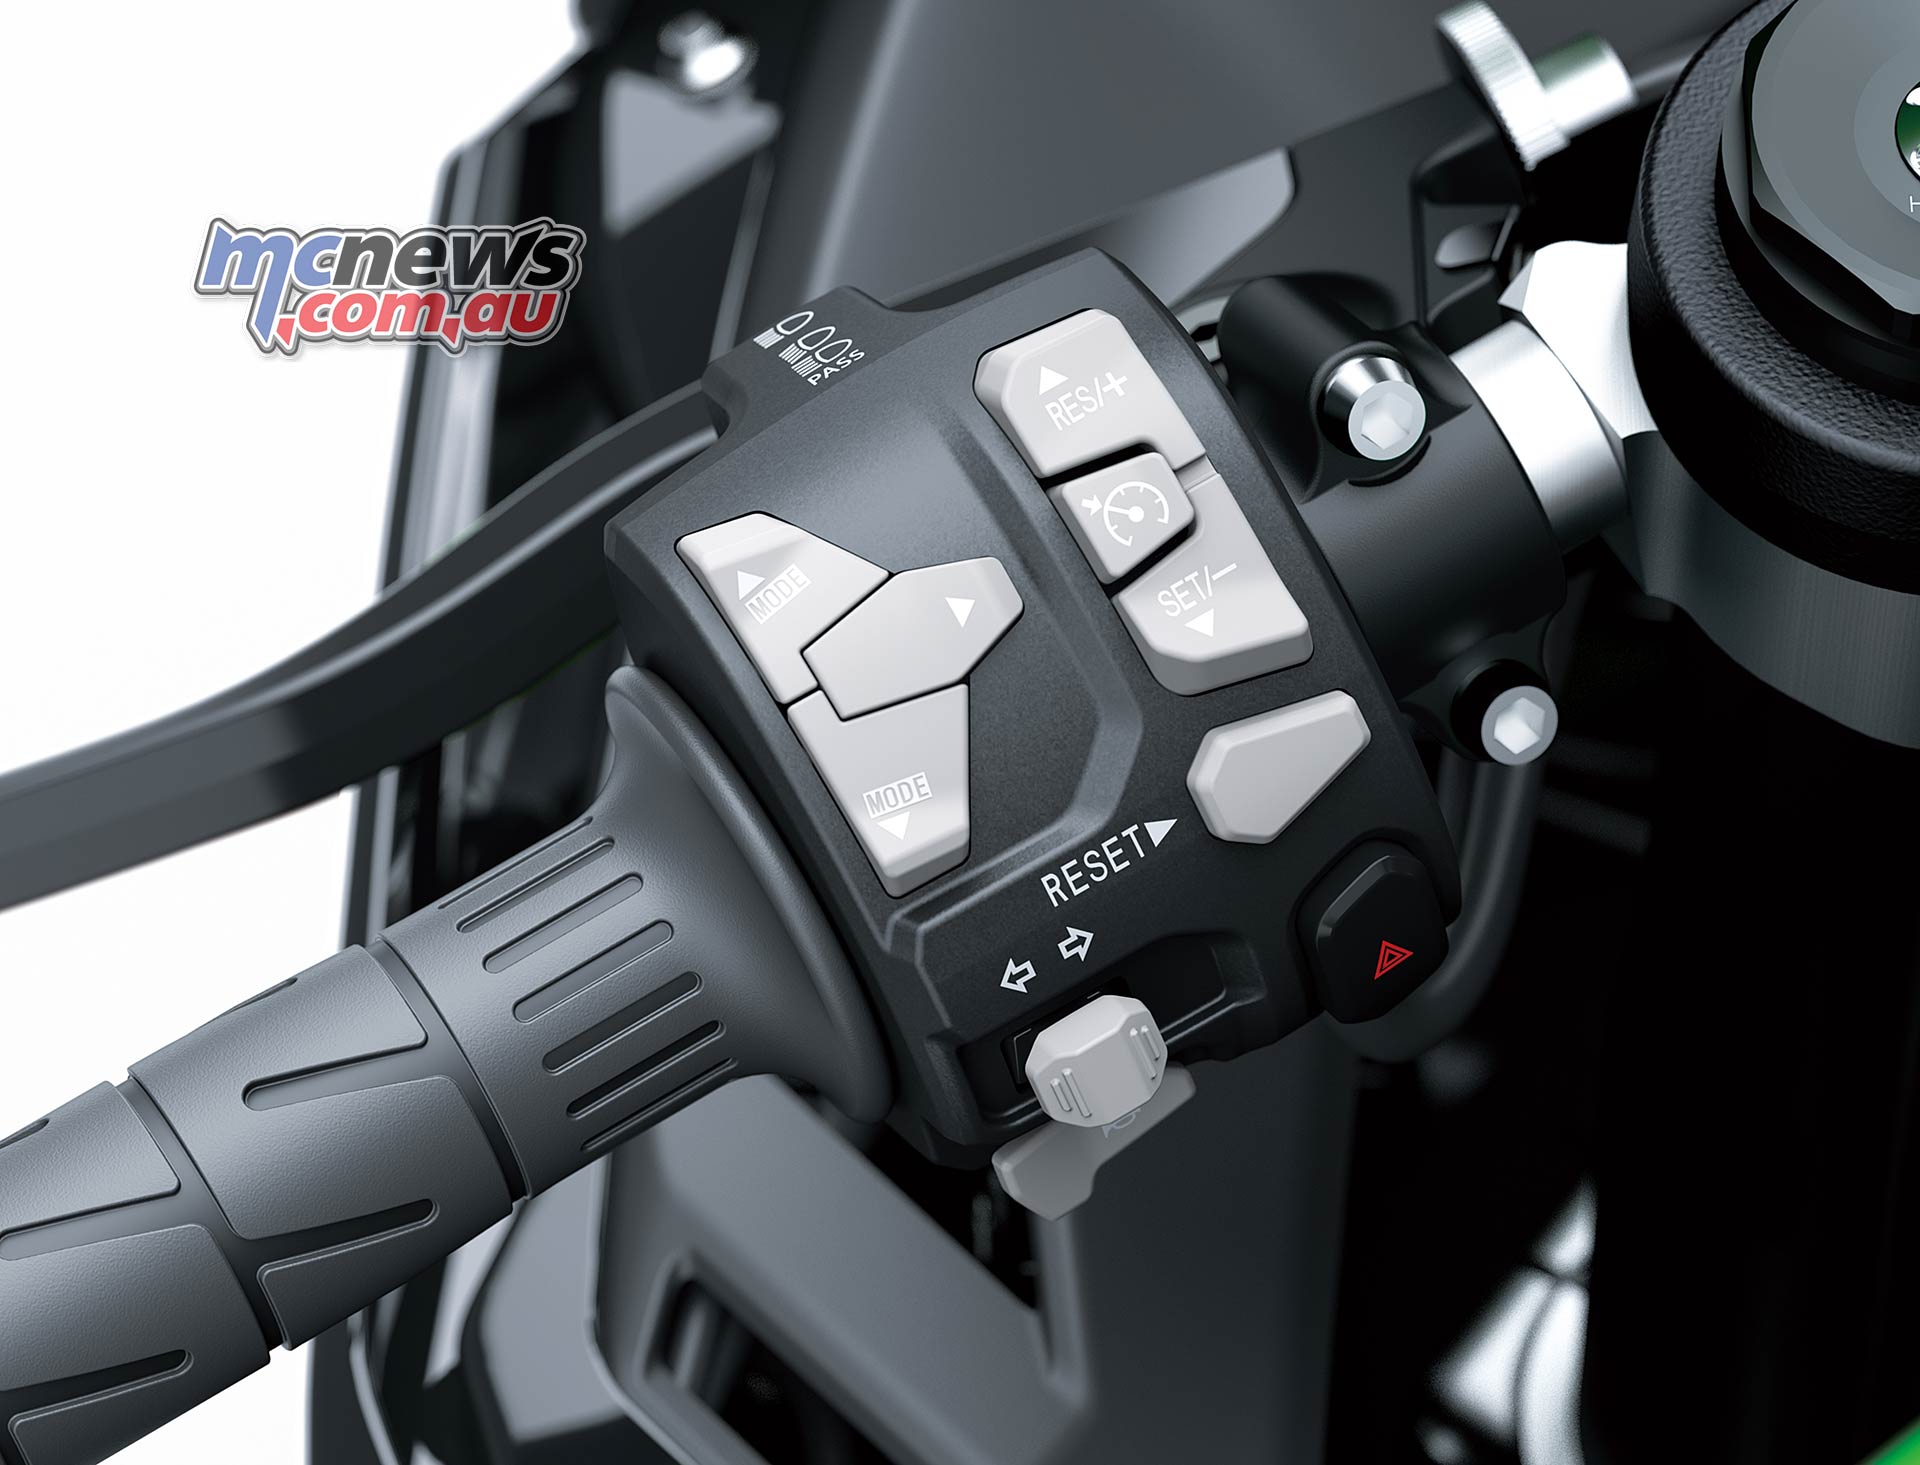 2021 Kawasaki Ninja Zx 10r Styling And Chassis Updates Motorcycle News Sport And Reviews